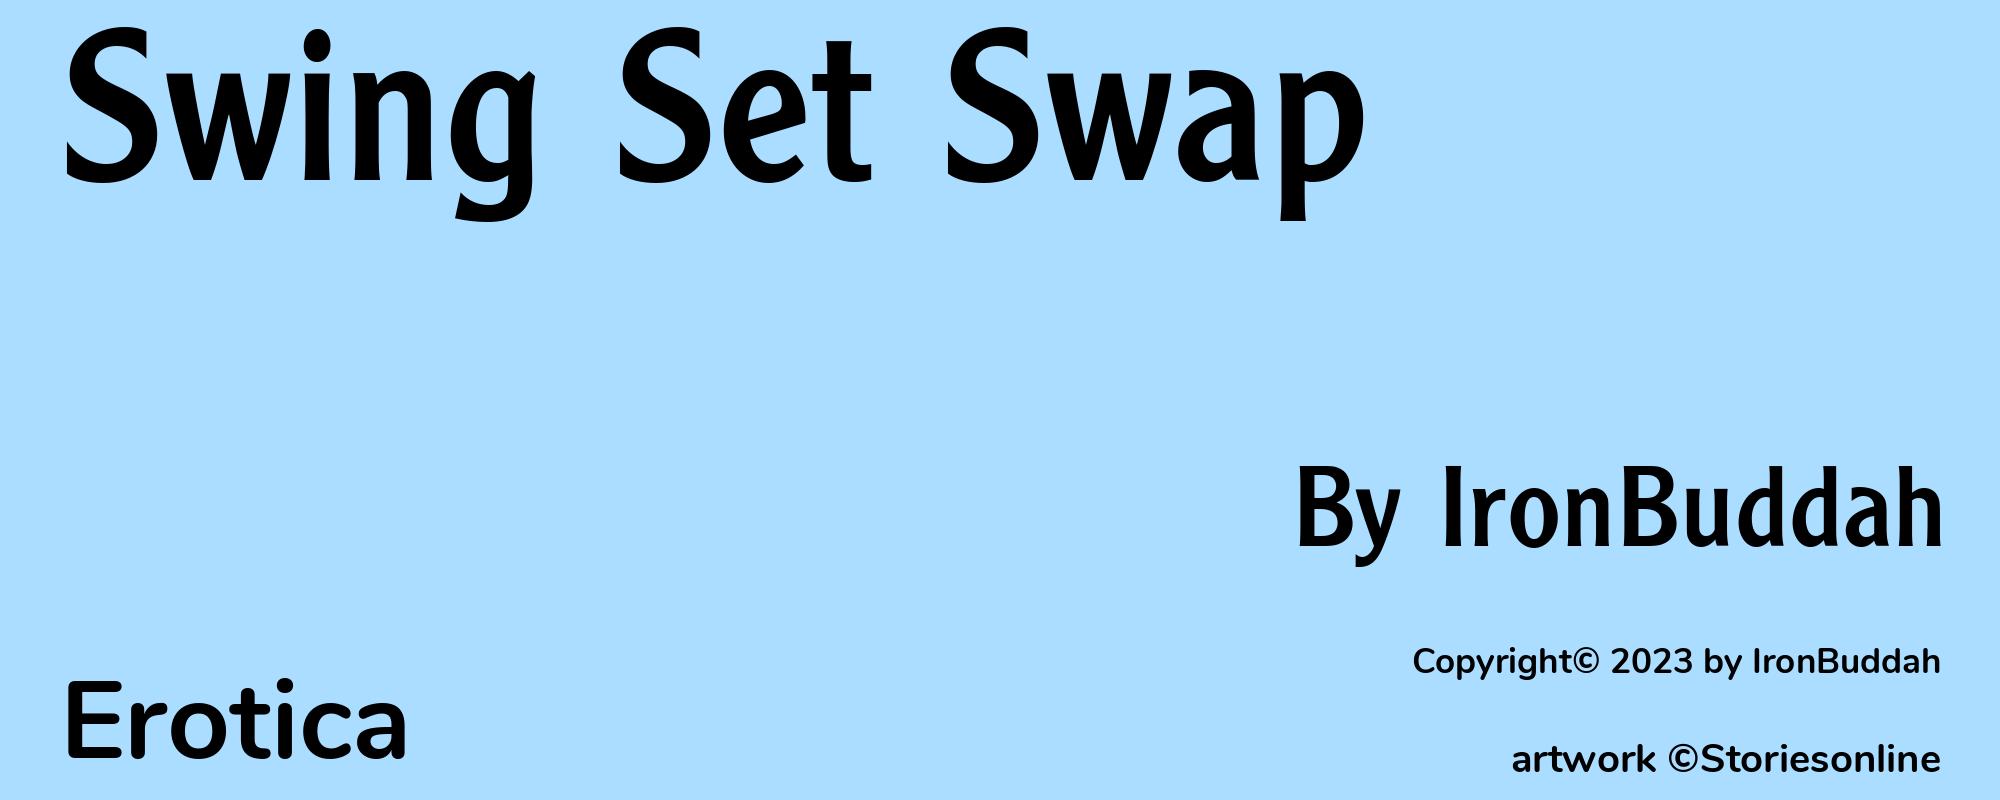 Swing Set Swap - Cover